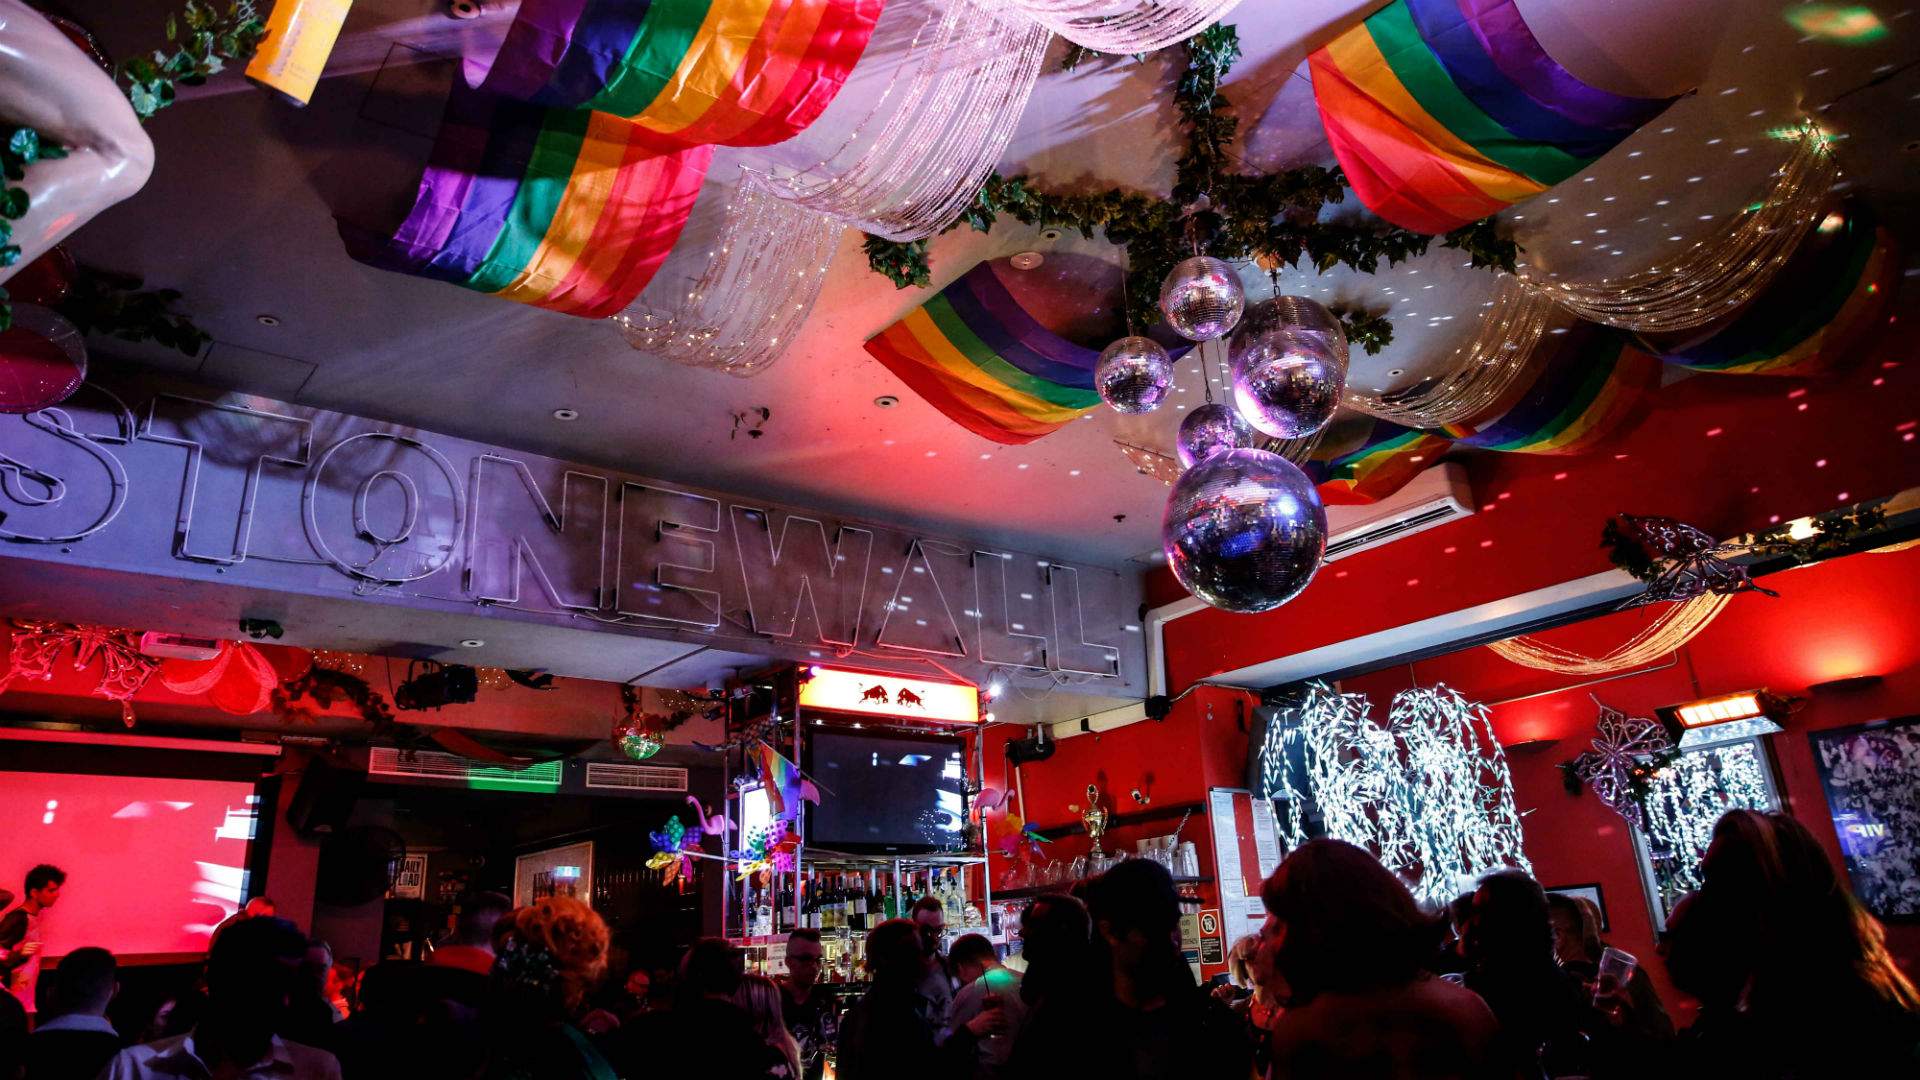 Stonewall Hotel